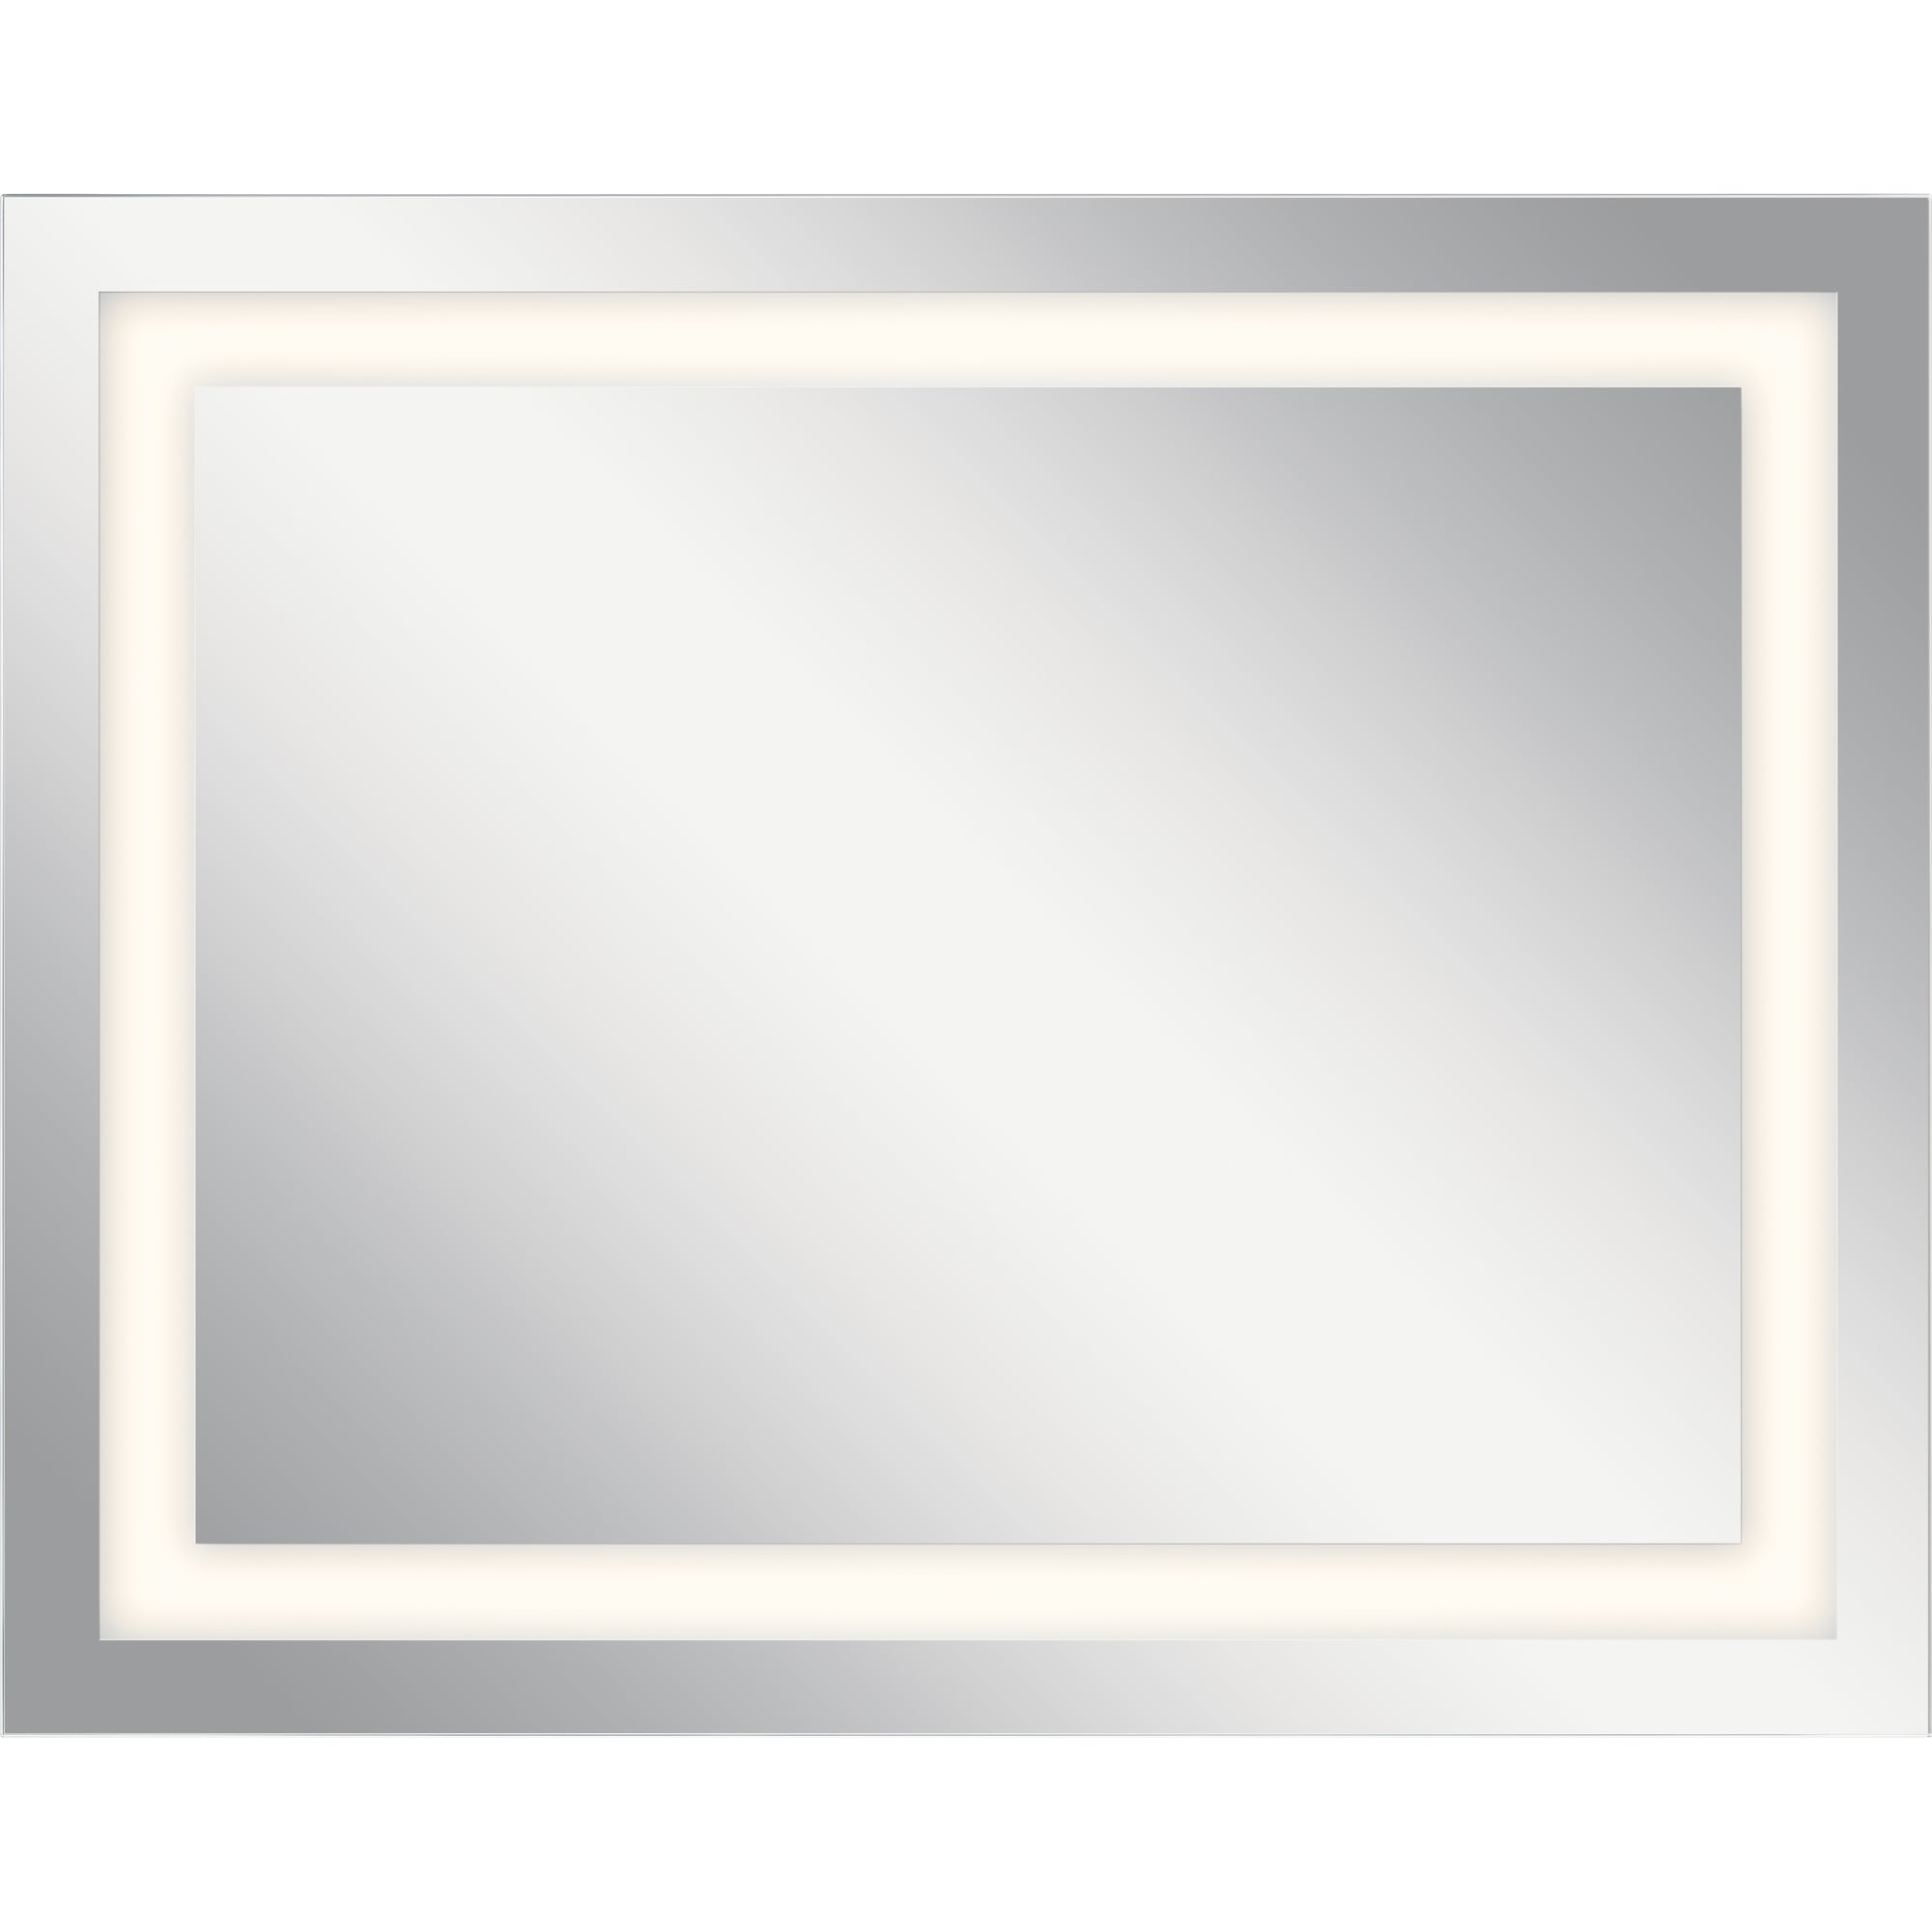 SIGNATURE Lighting mirror - 83994 | ELAN